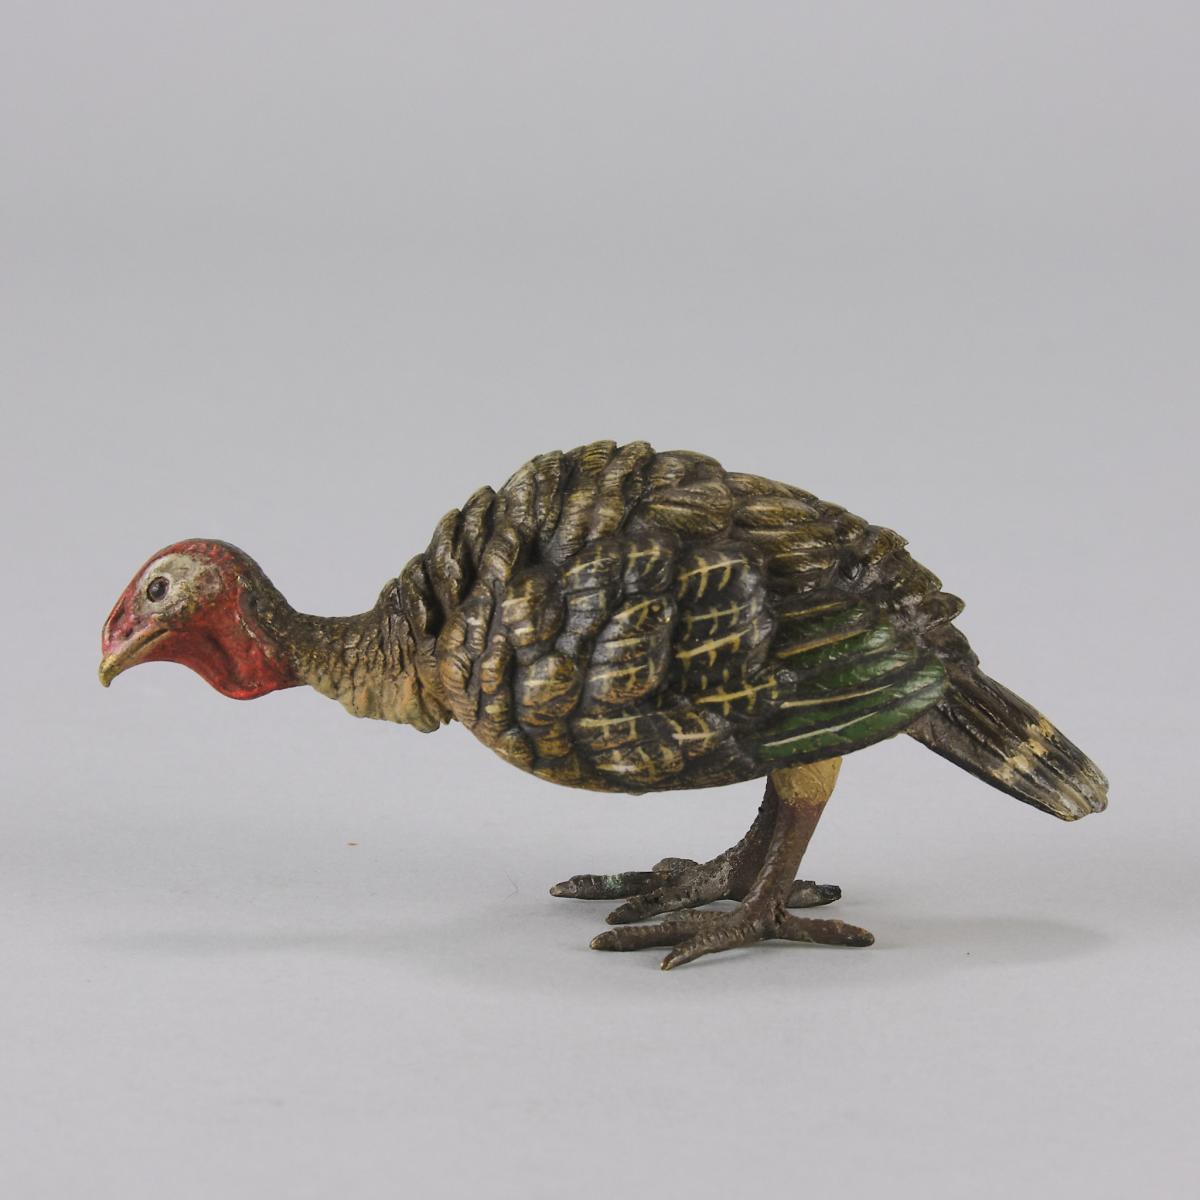 Early 20th Century cold-painted Austrian bronze entitled "Feeding Turkey" by Franz Bergman